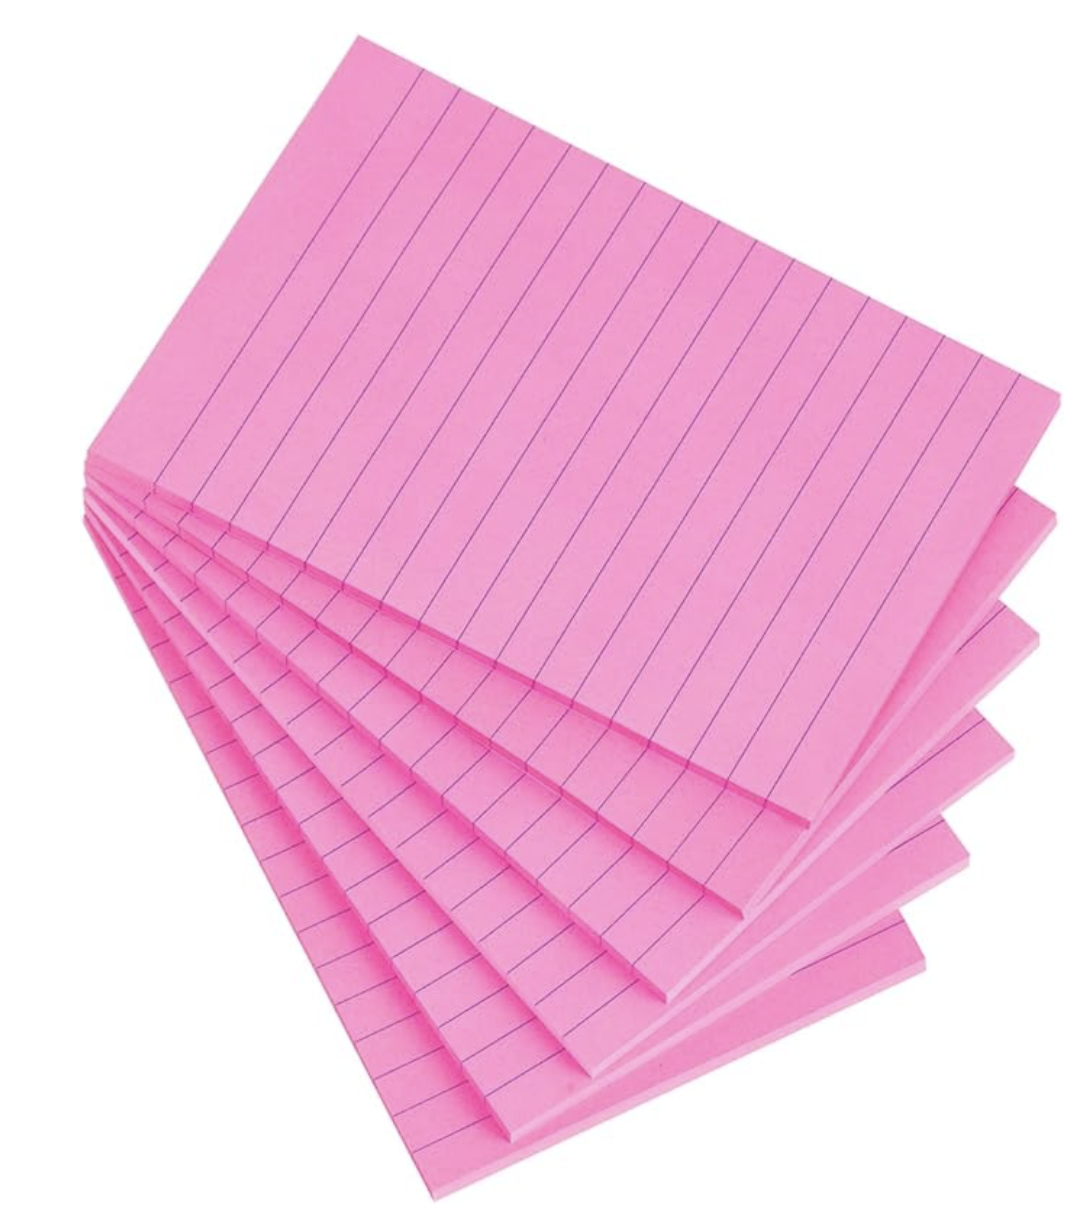 pink notepad